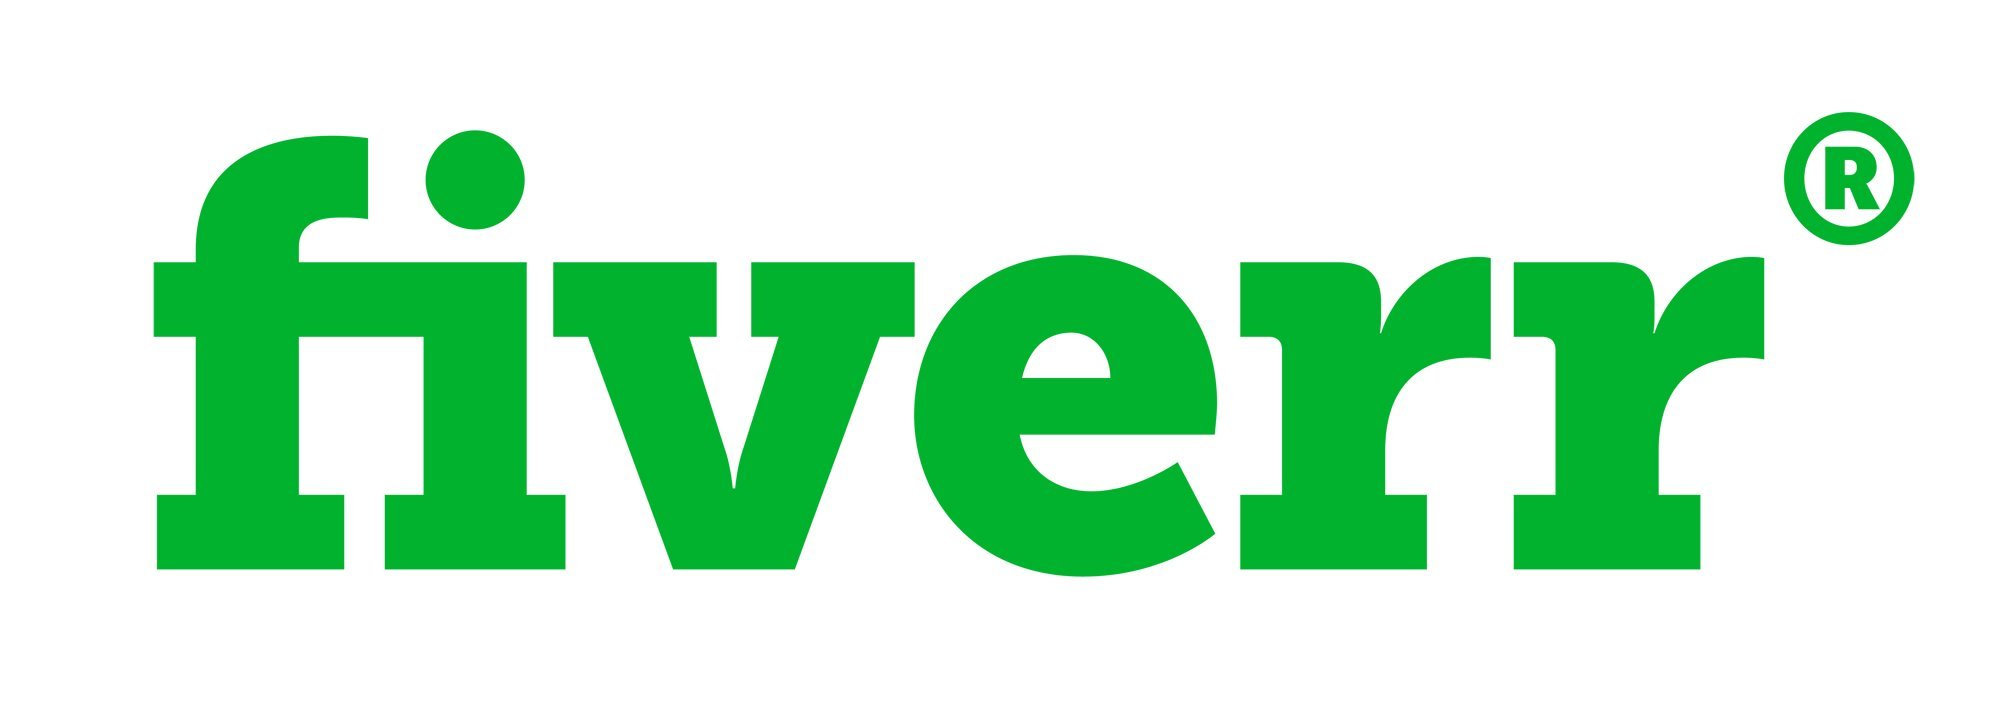 Font-Fiverr-Logo.jpeg